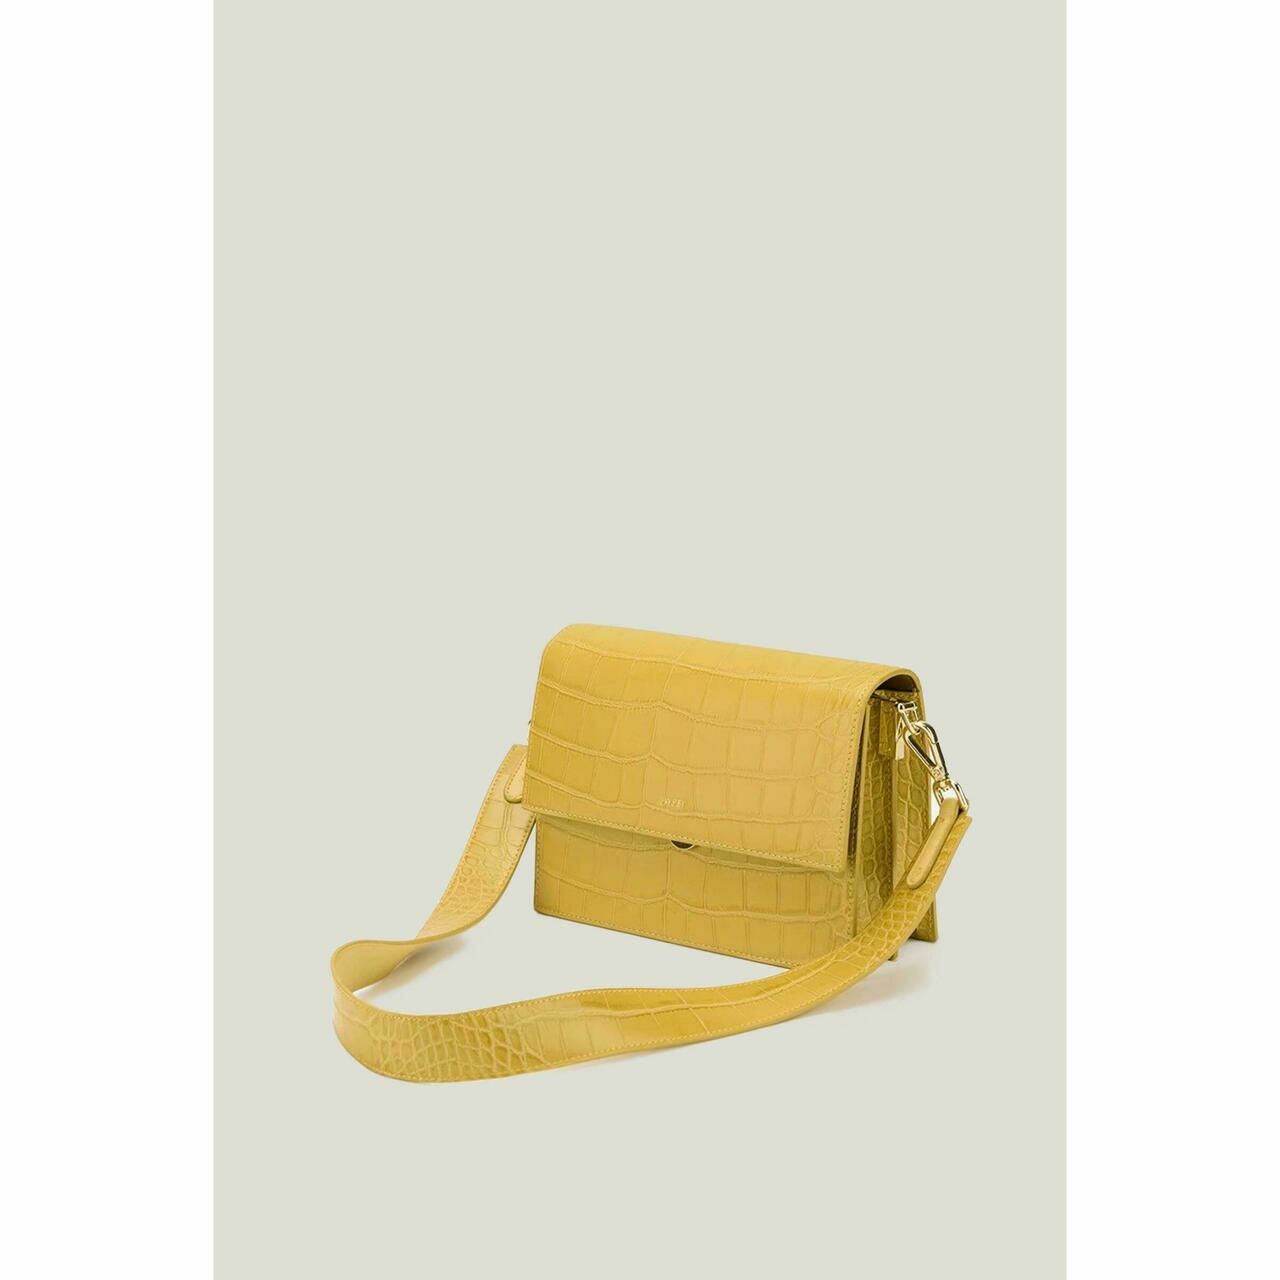 Jw pei Yellow Shoulder Bag